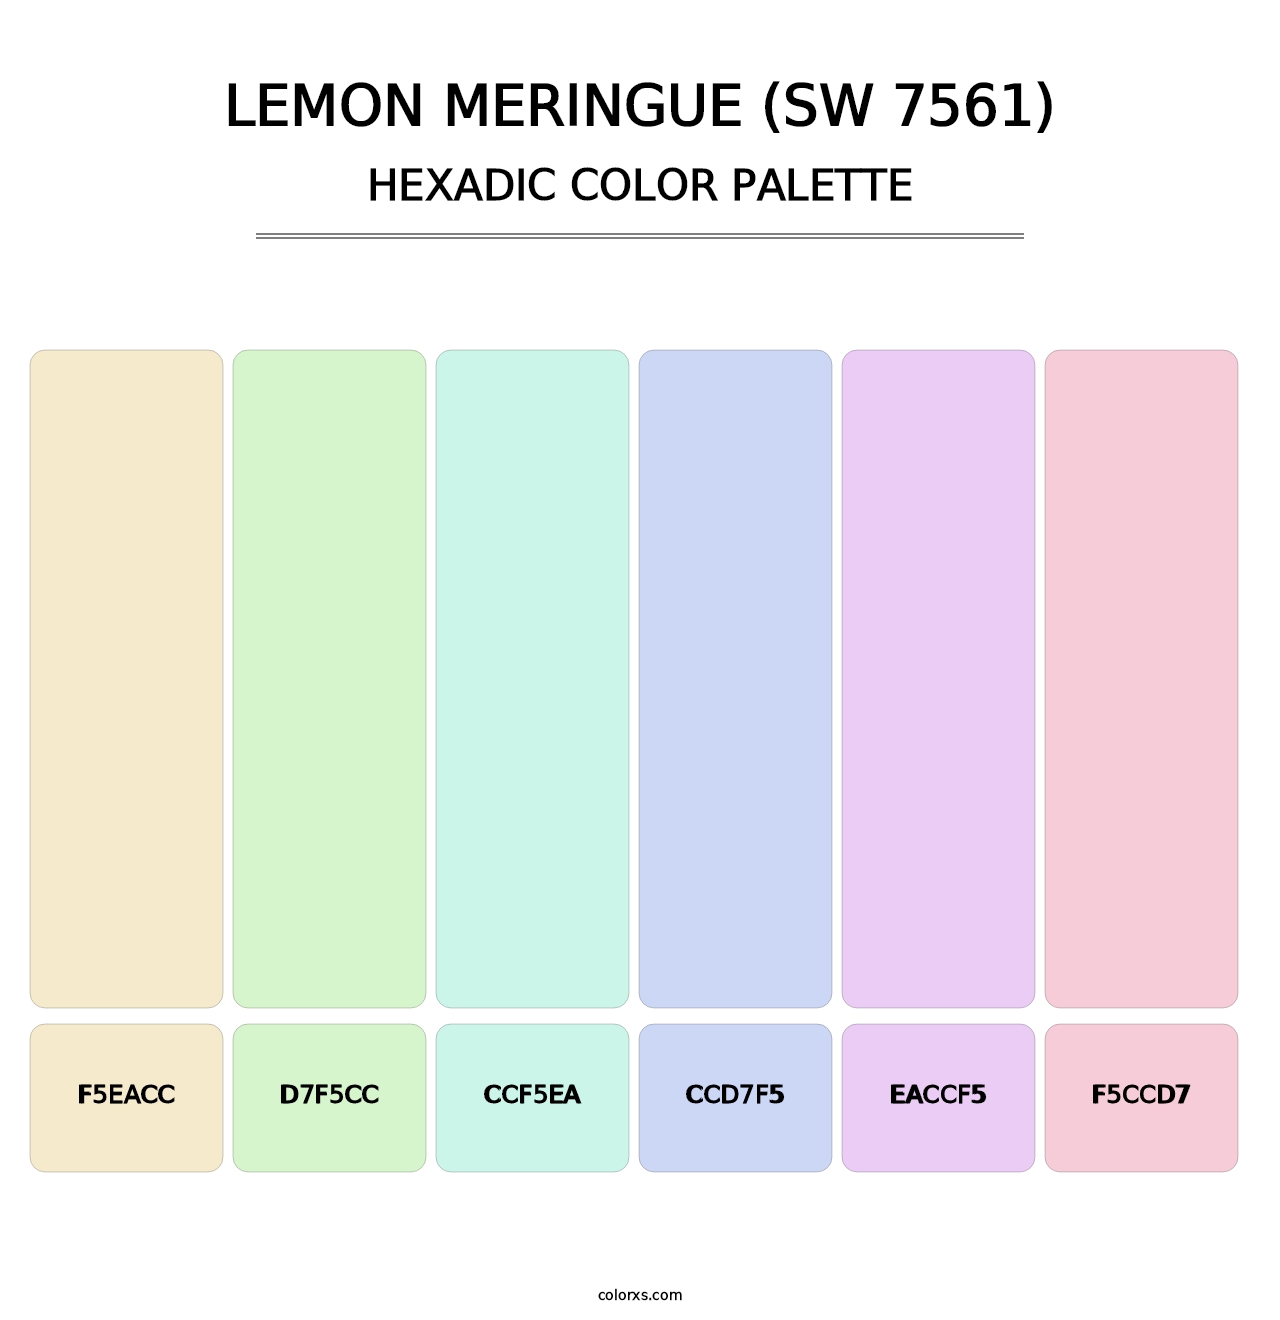 Lemon Meringue (SW 7561) - Hexadic Color Palette